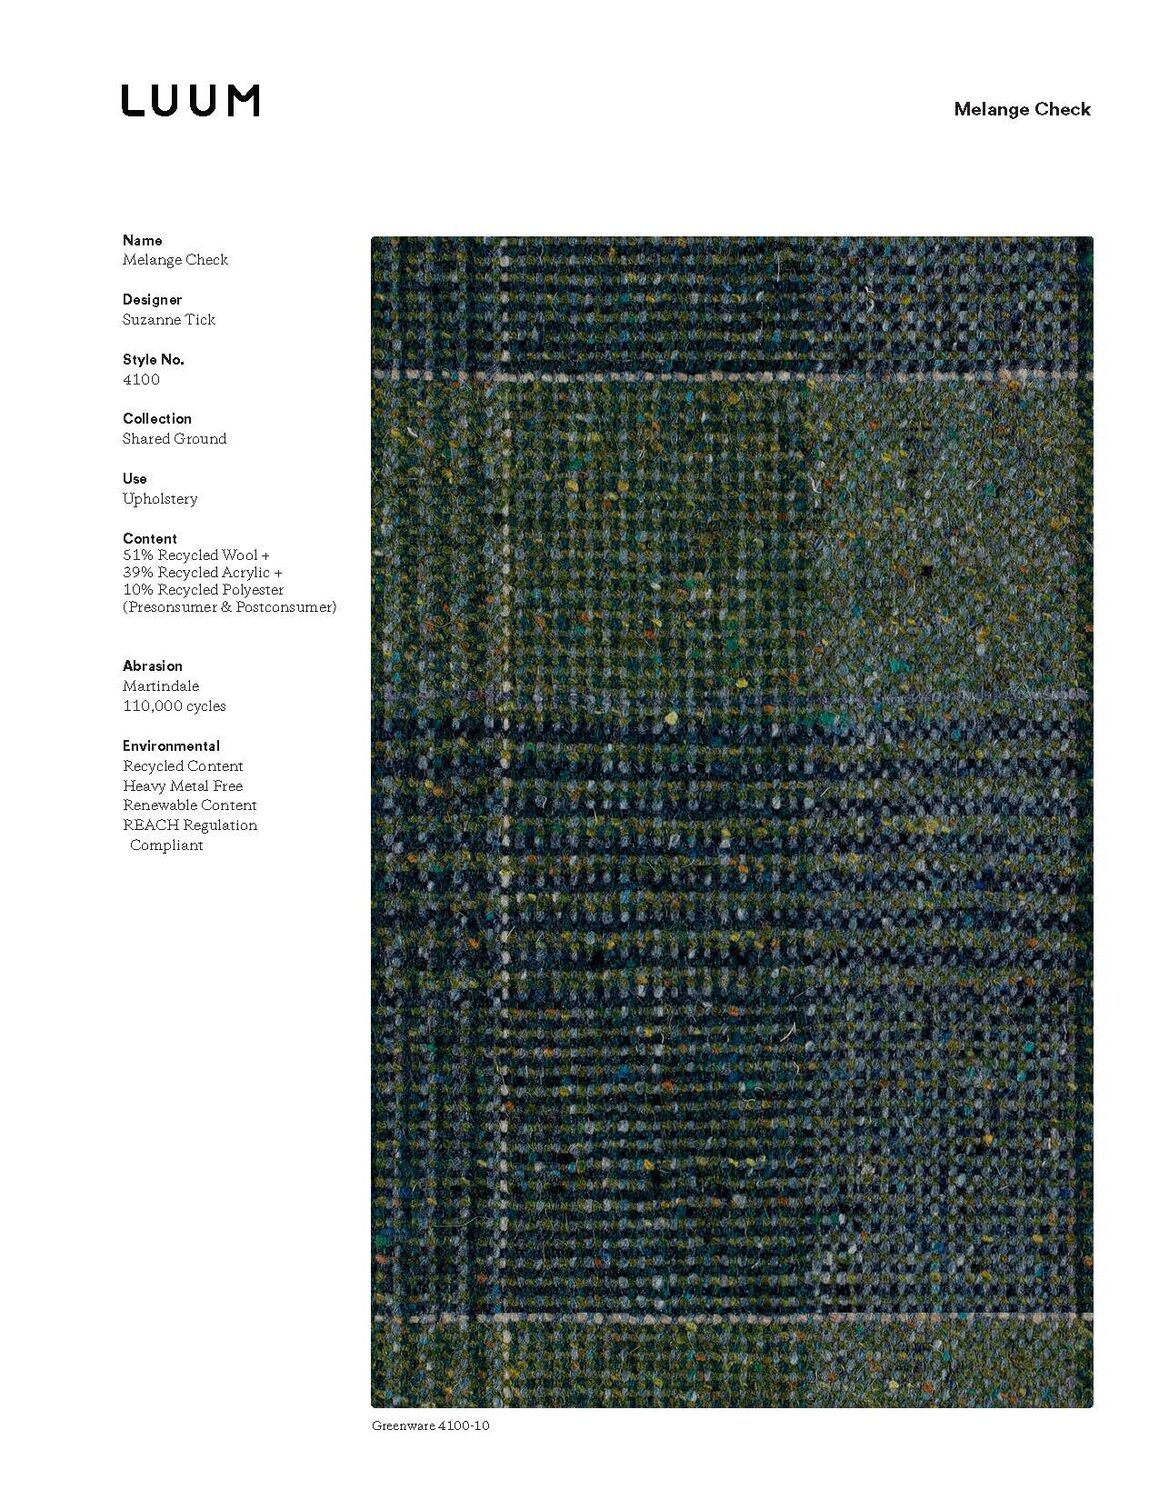 Melange Check - Brick Dust - 4100 - 06 - Half Yard Sample Card